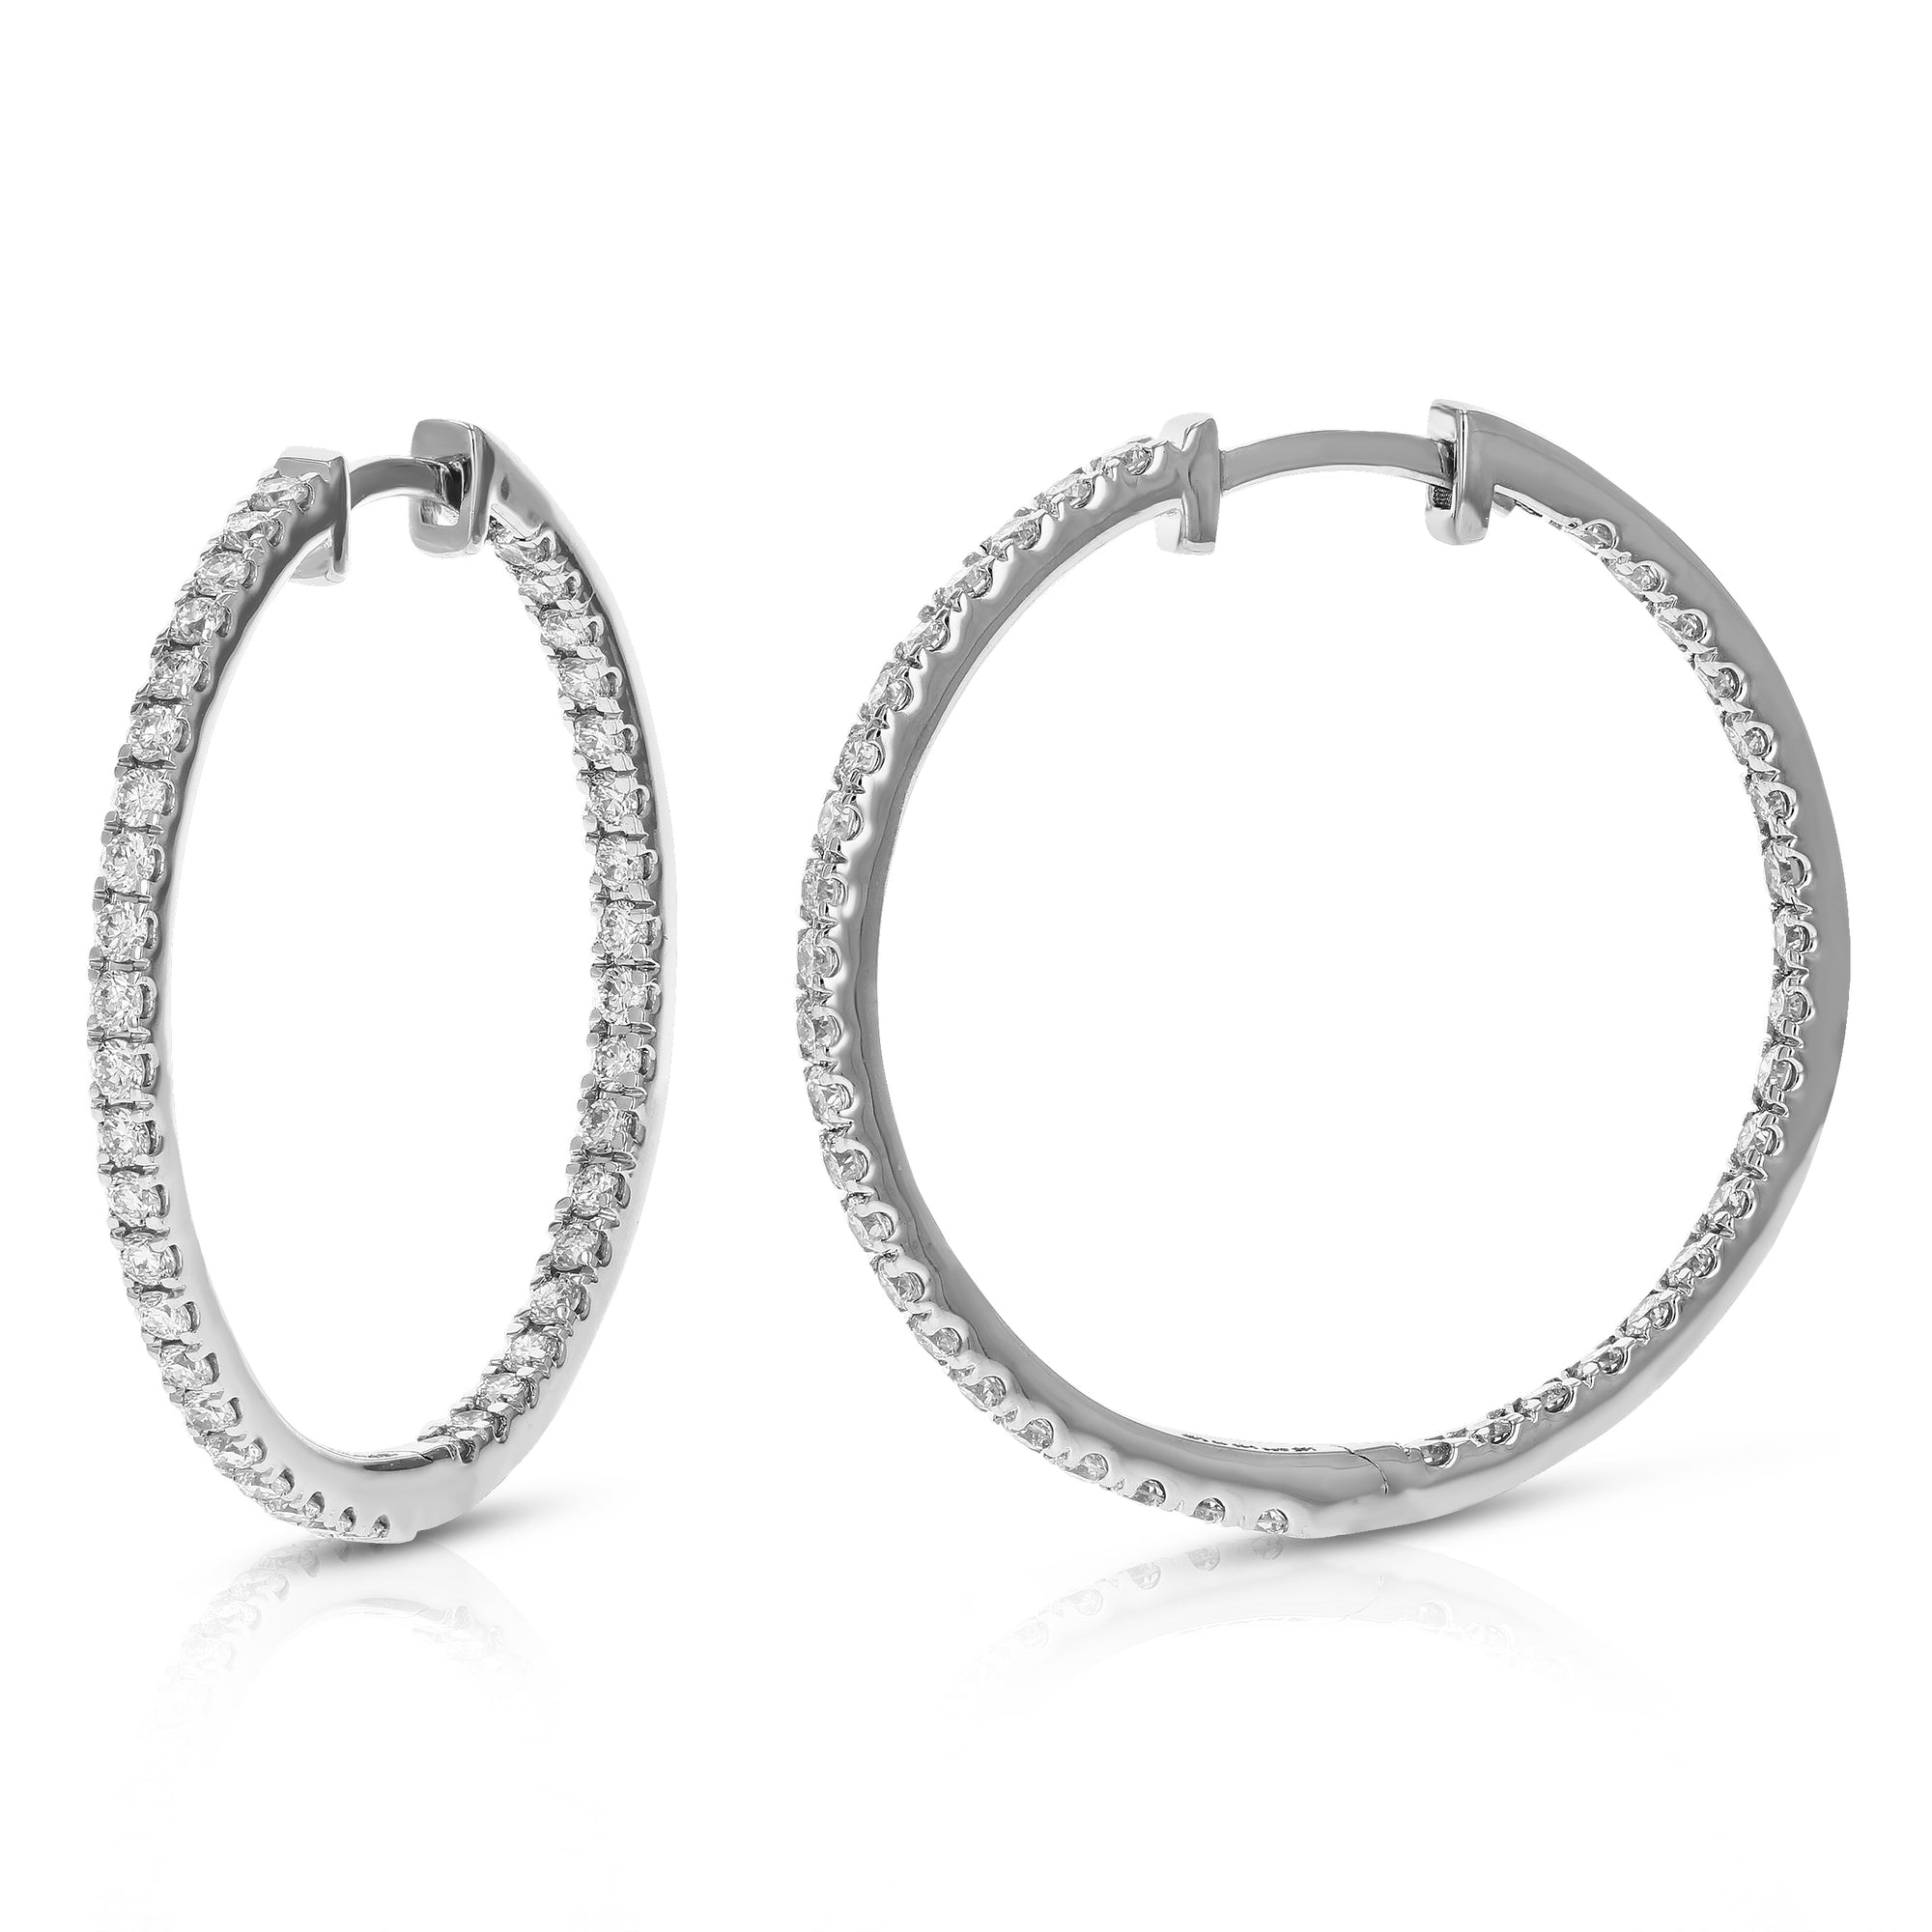 1 cttw 80 Stones Round Lab Grown Diamond Hoop Earrings 14K White Gold Prong Set 1 Inch